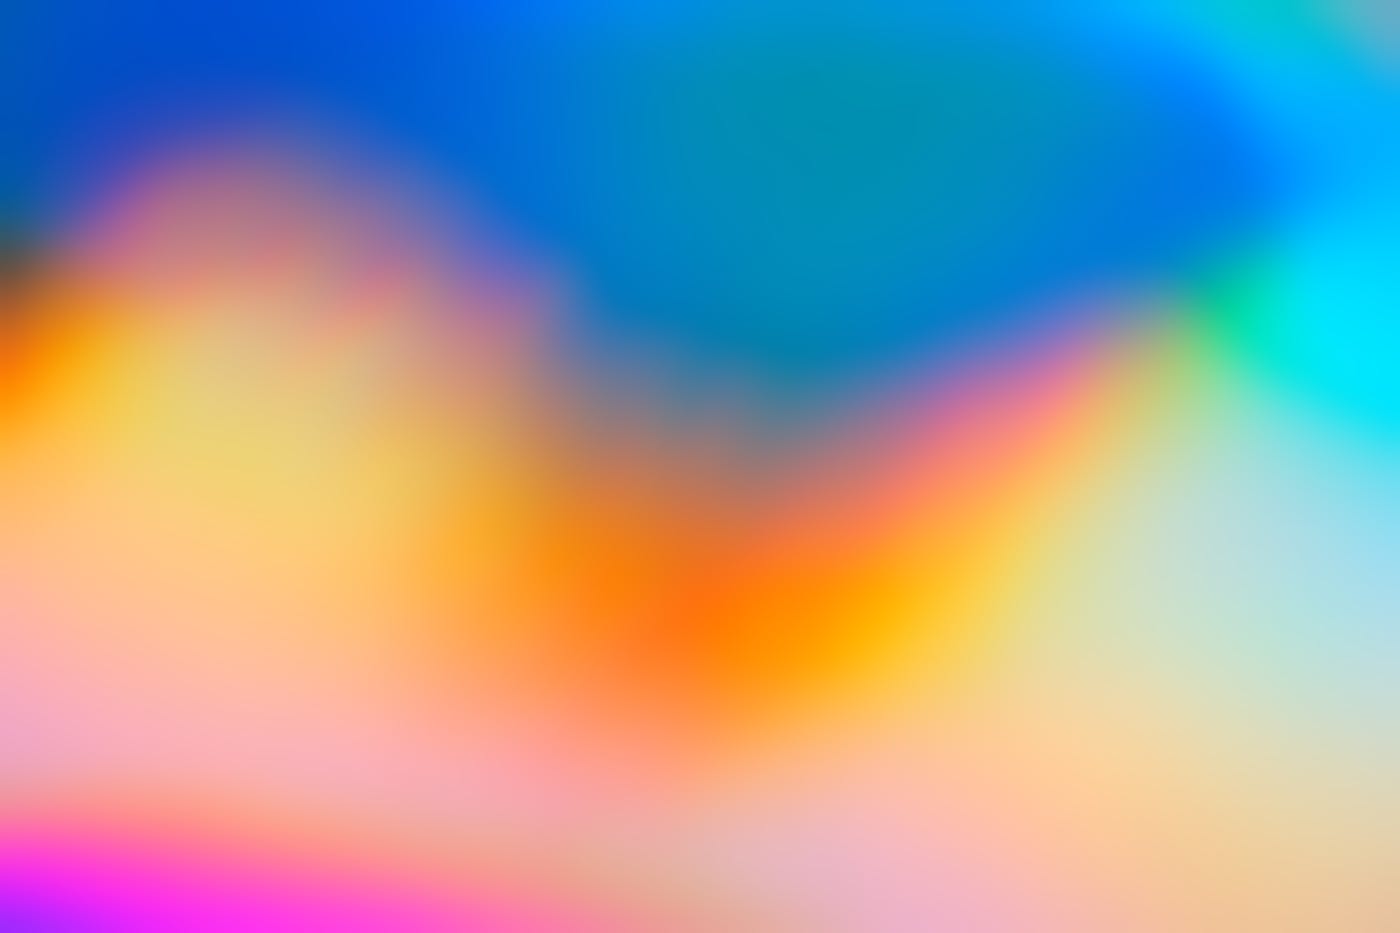 A fluid image of the color spectrum